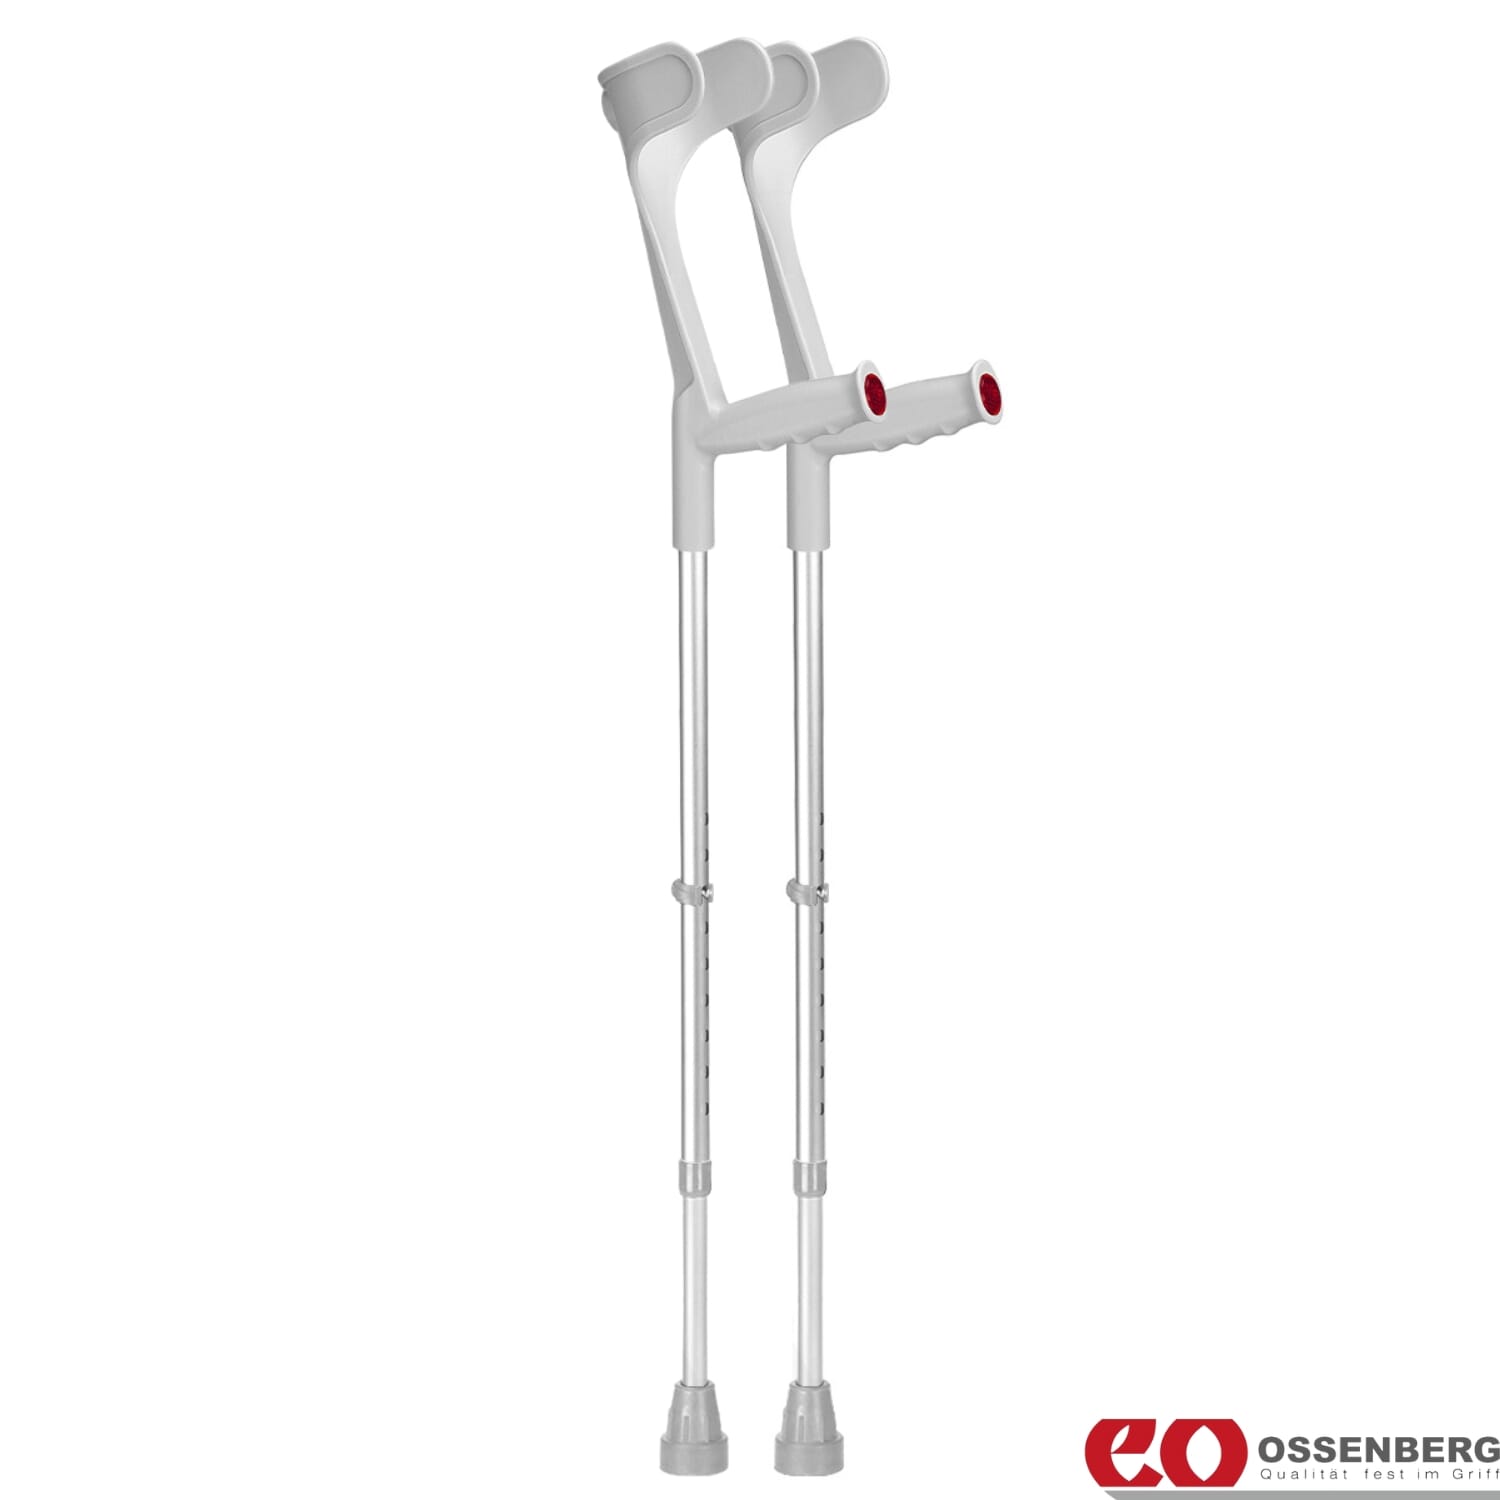 View Ossenberg Open Cuff Crutches Grey Pair information